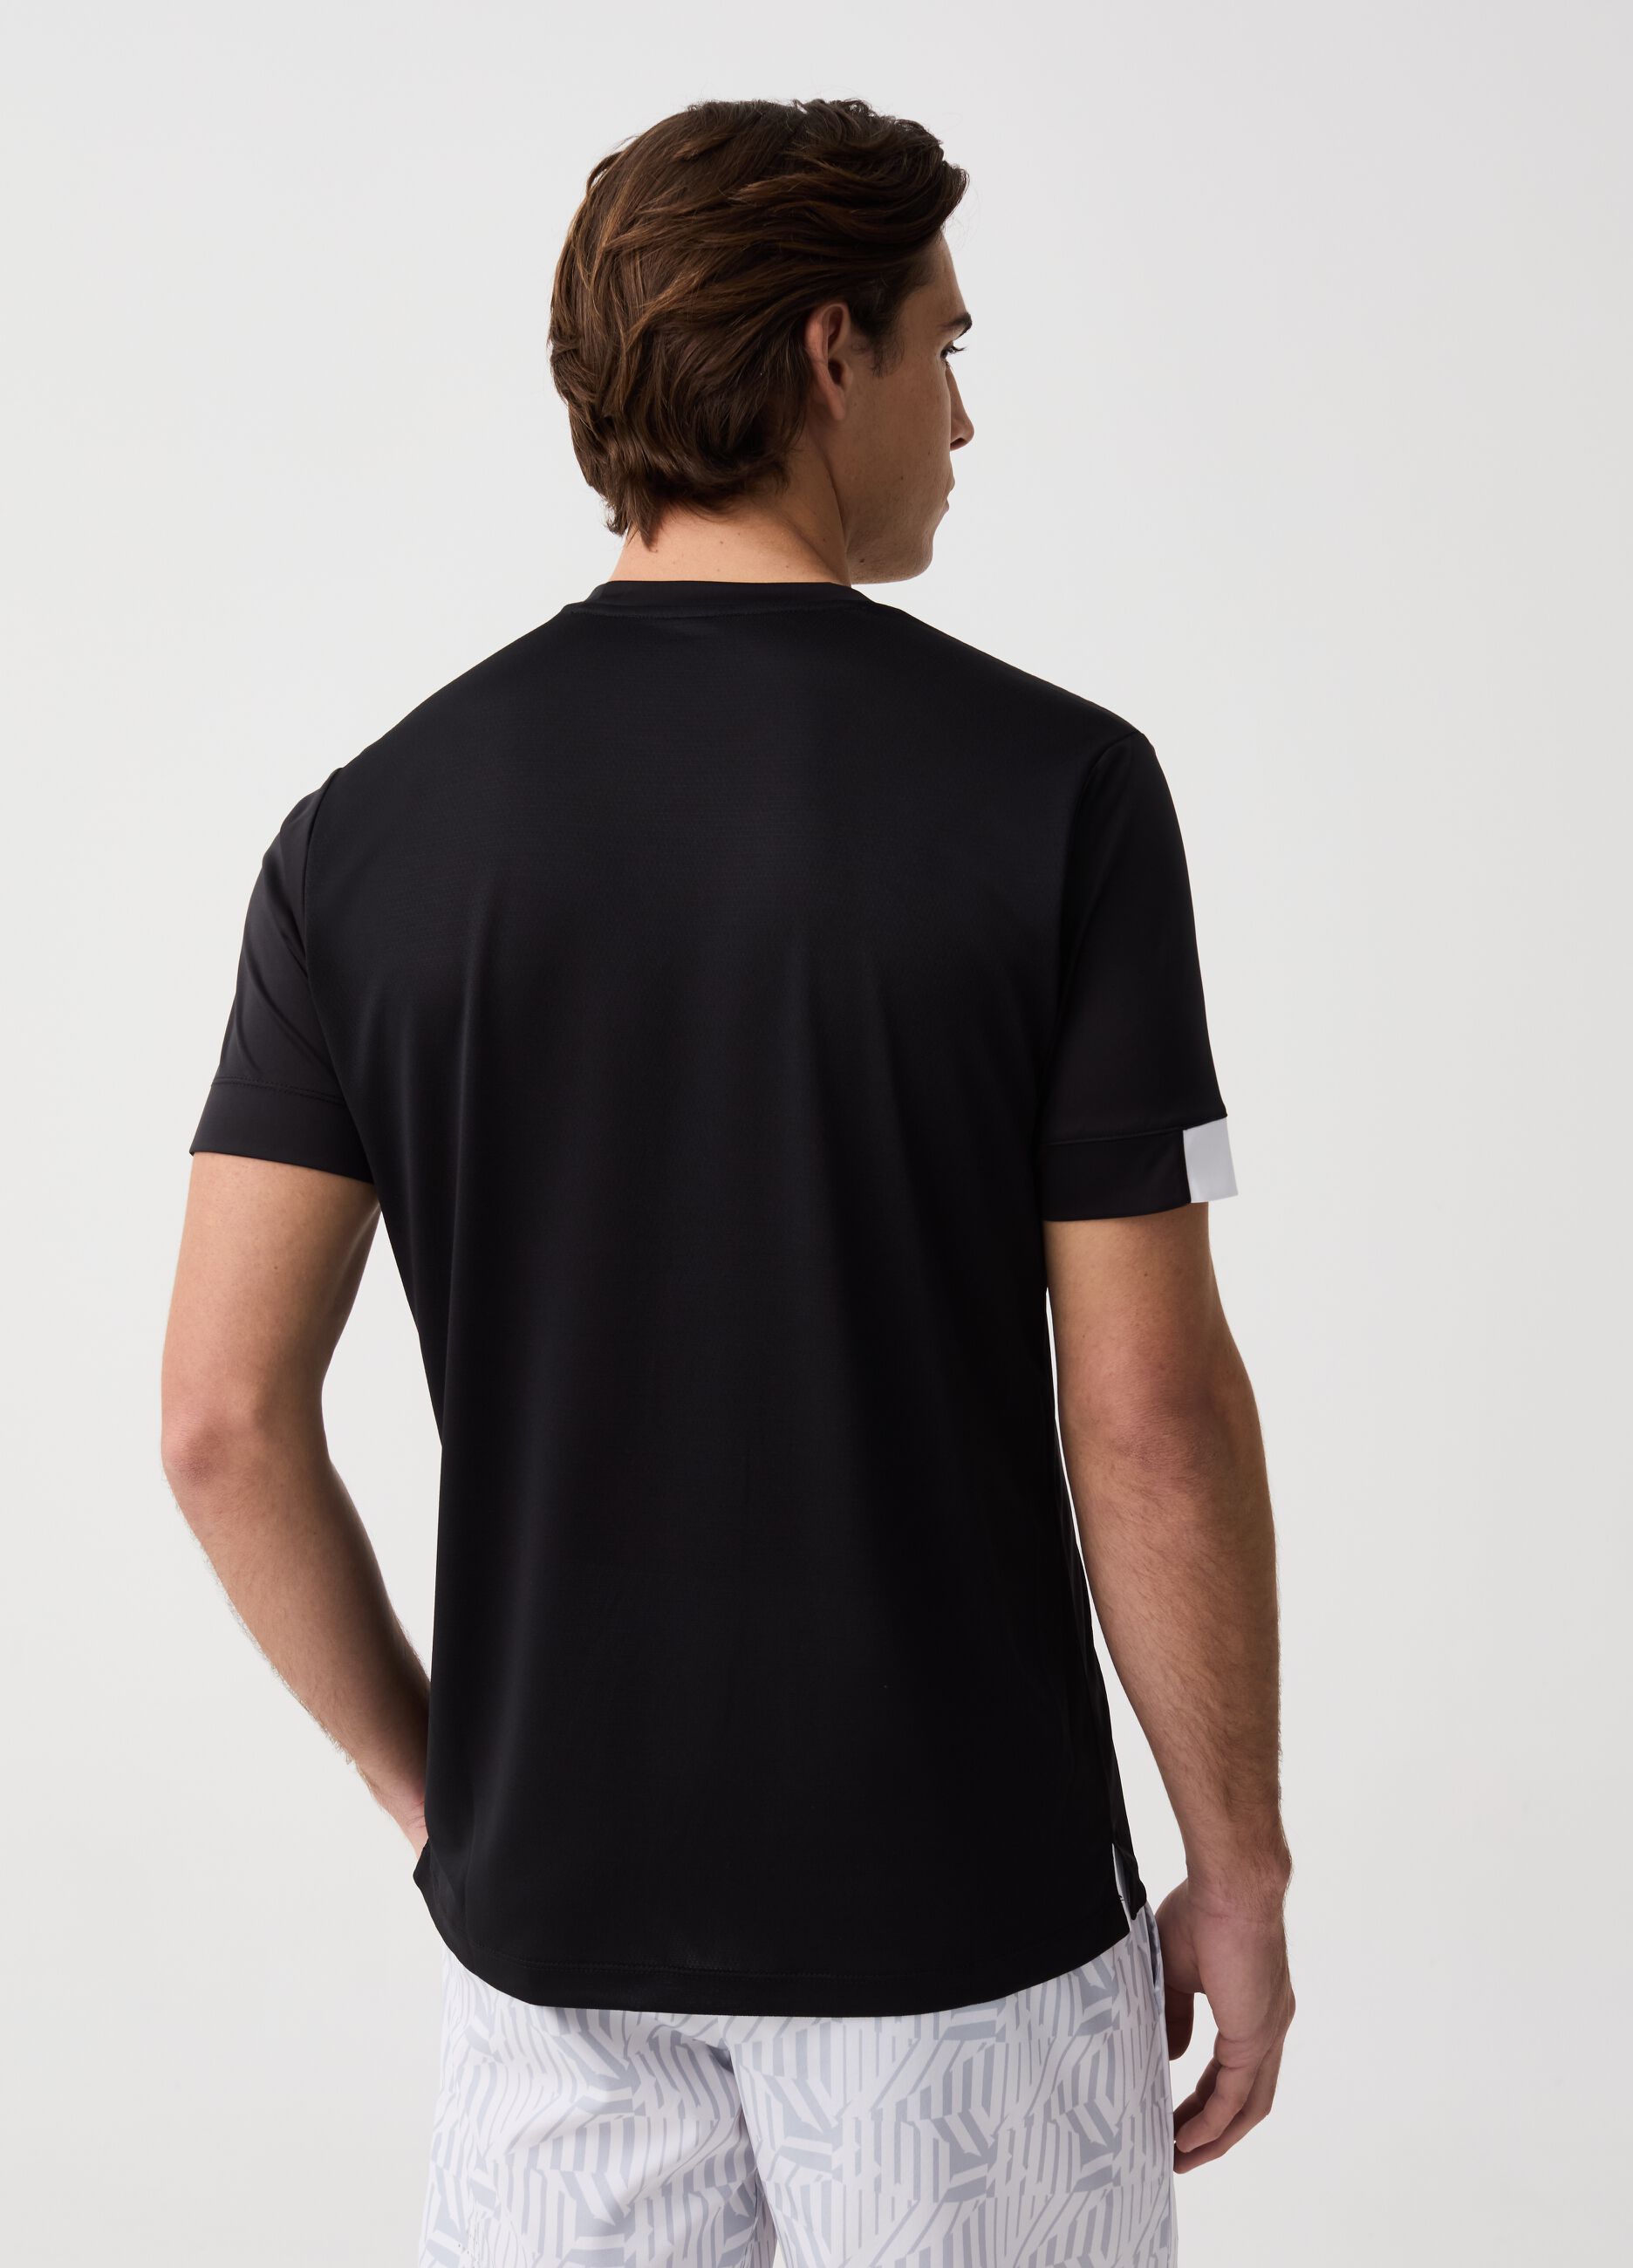 Quick-dry tennis T-shirt with Slazenger print